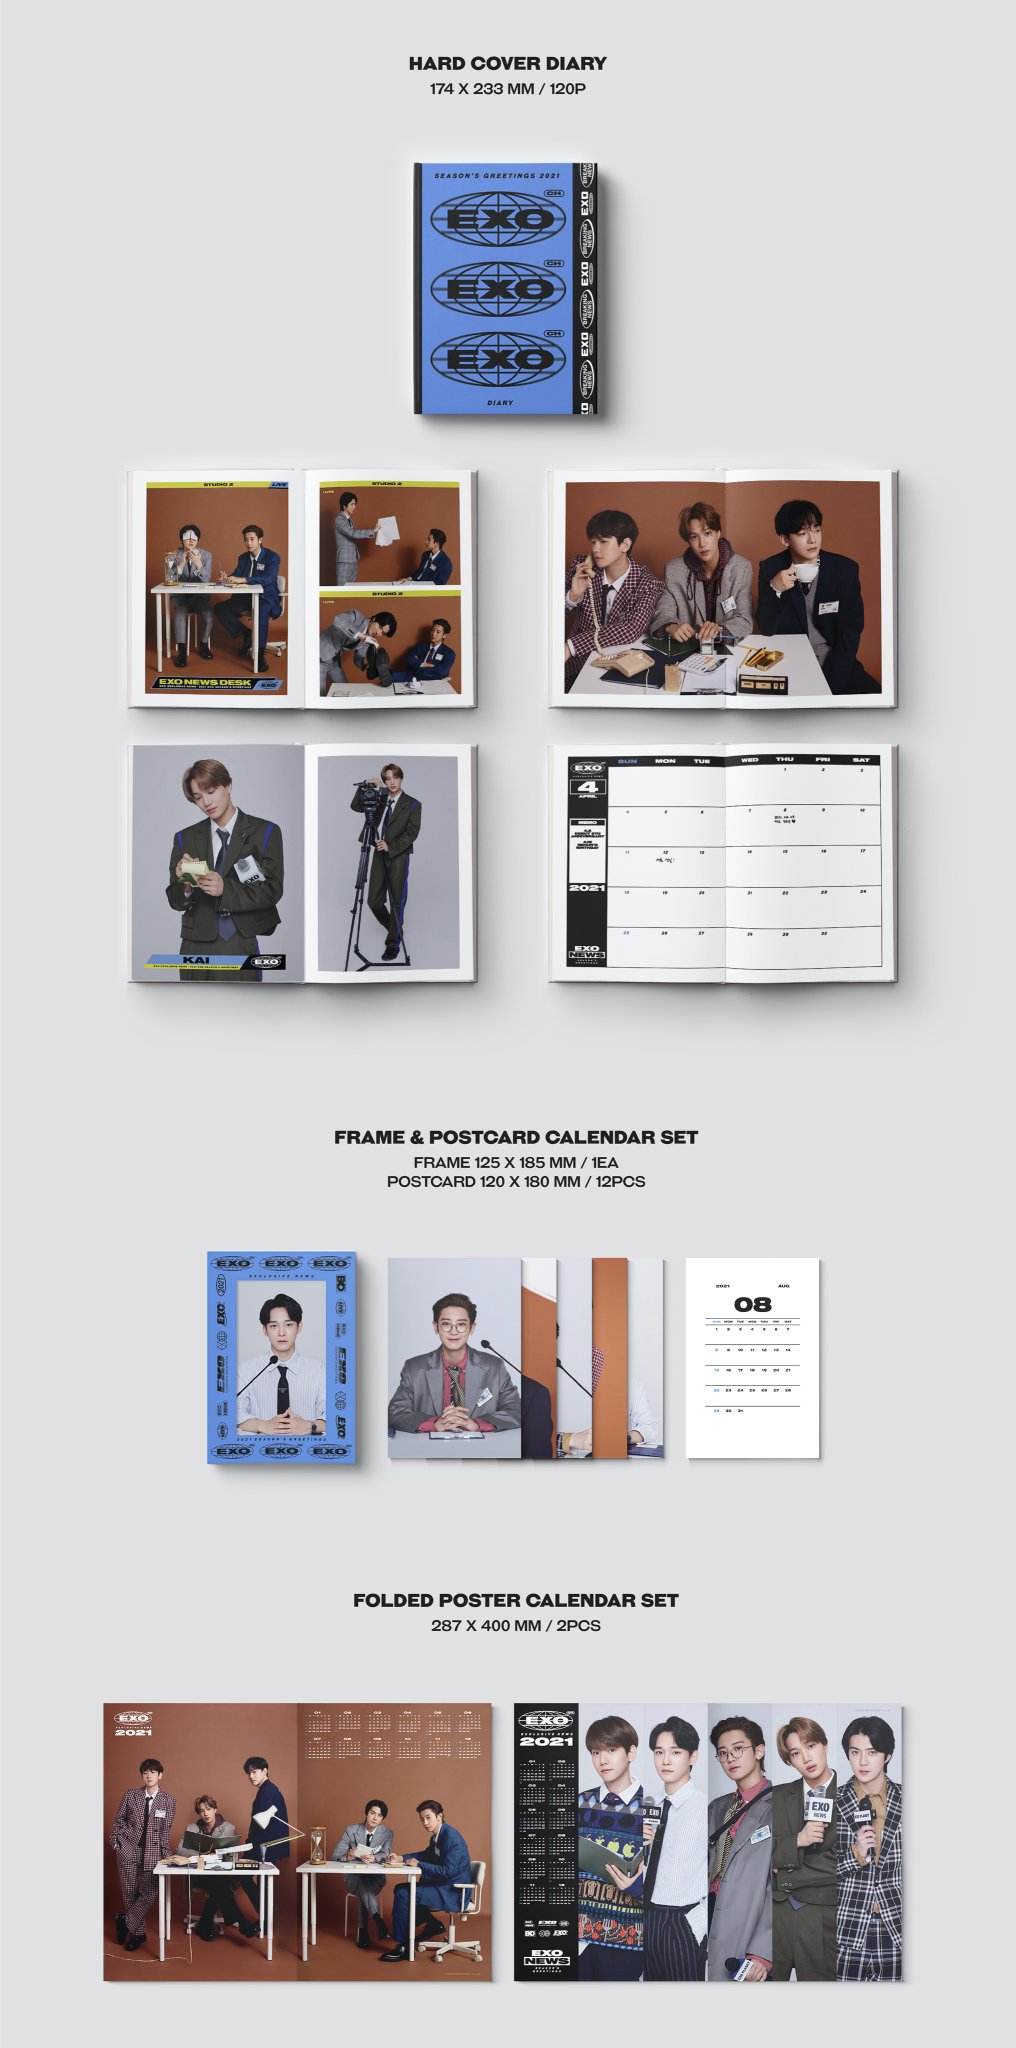 Exo 21 Sm Artist Season S Greetings Exo 구성 안내 1 Package 2 Desk Calendar 3 Hard Cover Diary 4 Frame Postcard Calendar Set 5 Folded Poster Calendar Set 6